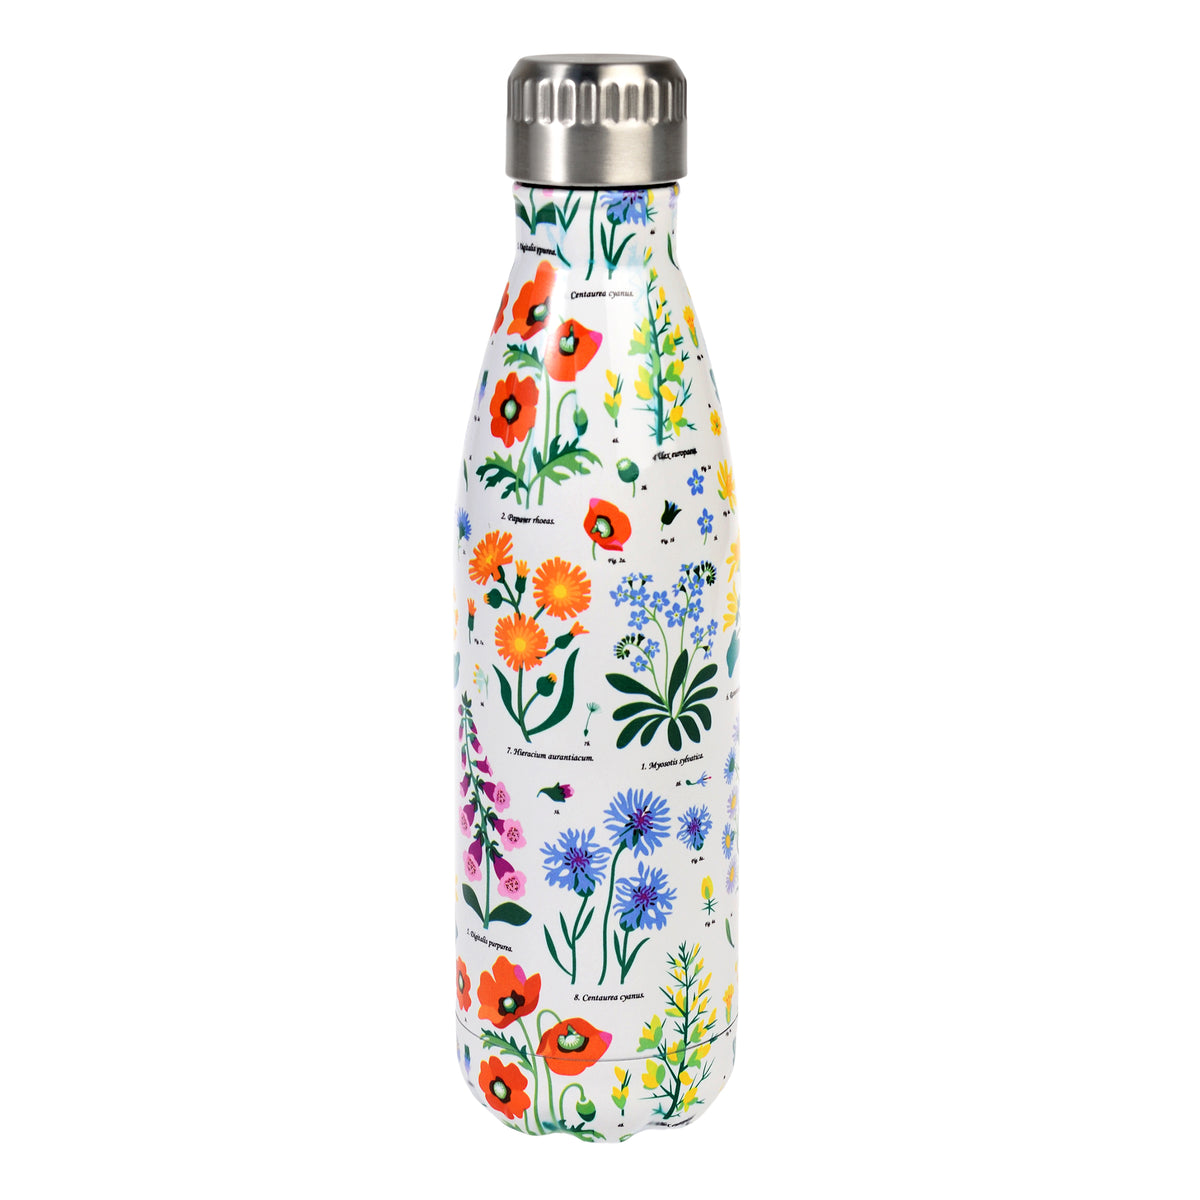 Wildflower stainless steel bottle